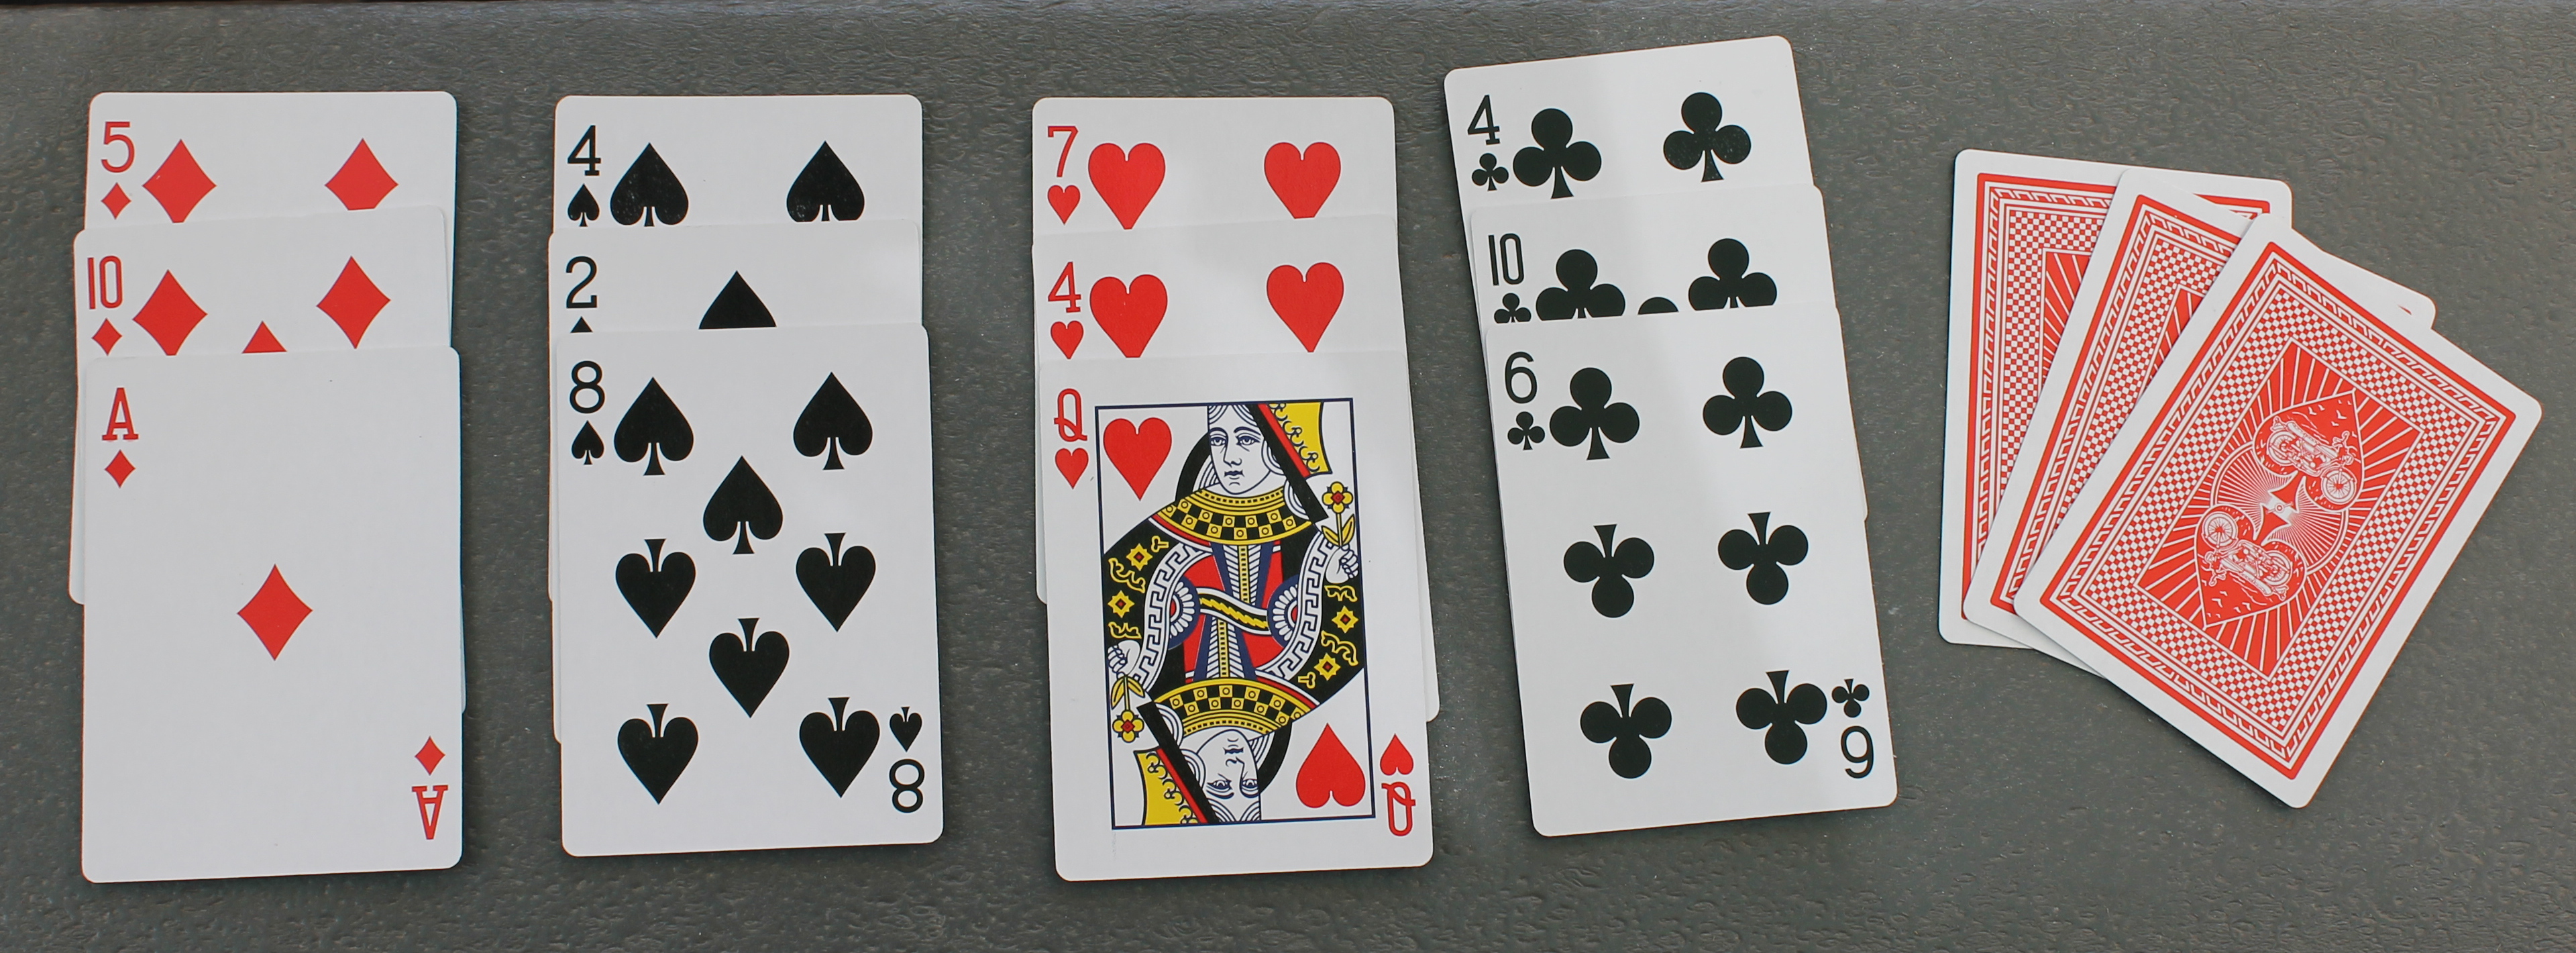 Fifteen playing cards, three diamonds, three spades, three hearts, three clubs, three facedown.